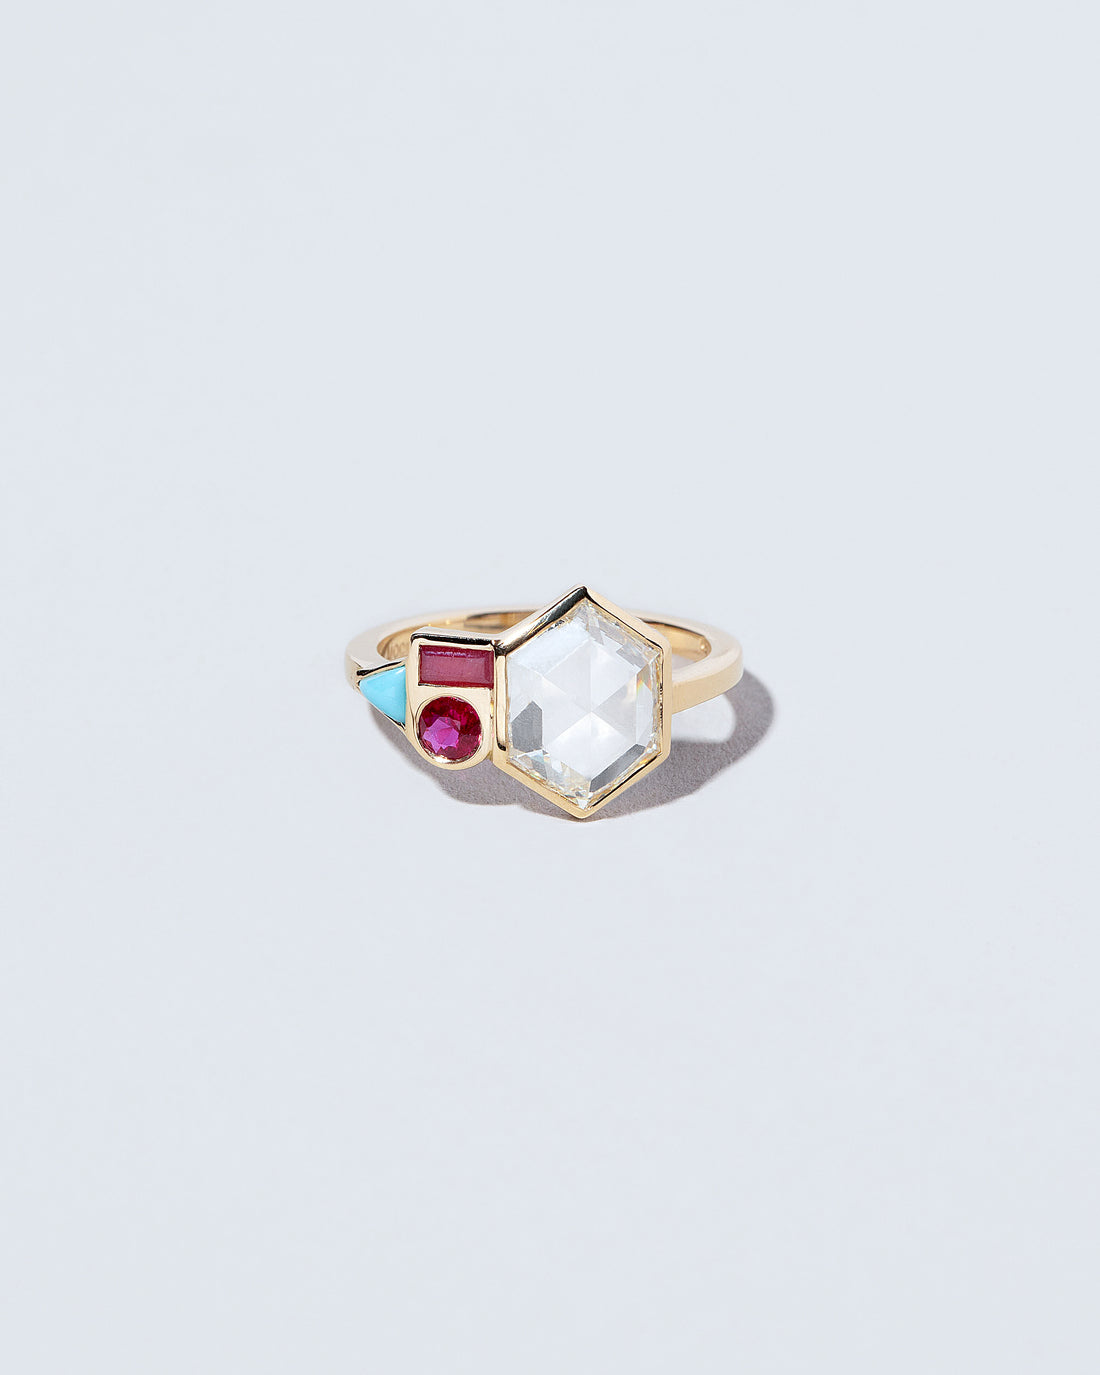 Hexagonal Diamond, Ruby & Turquoise Ring front facing